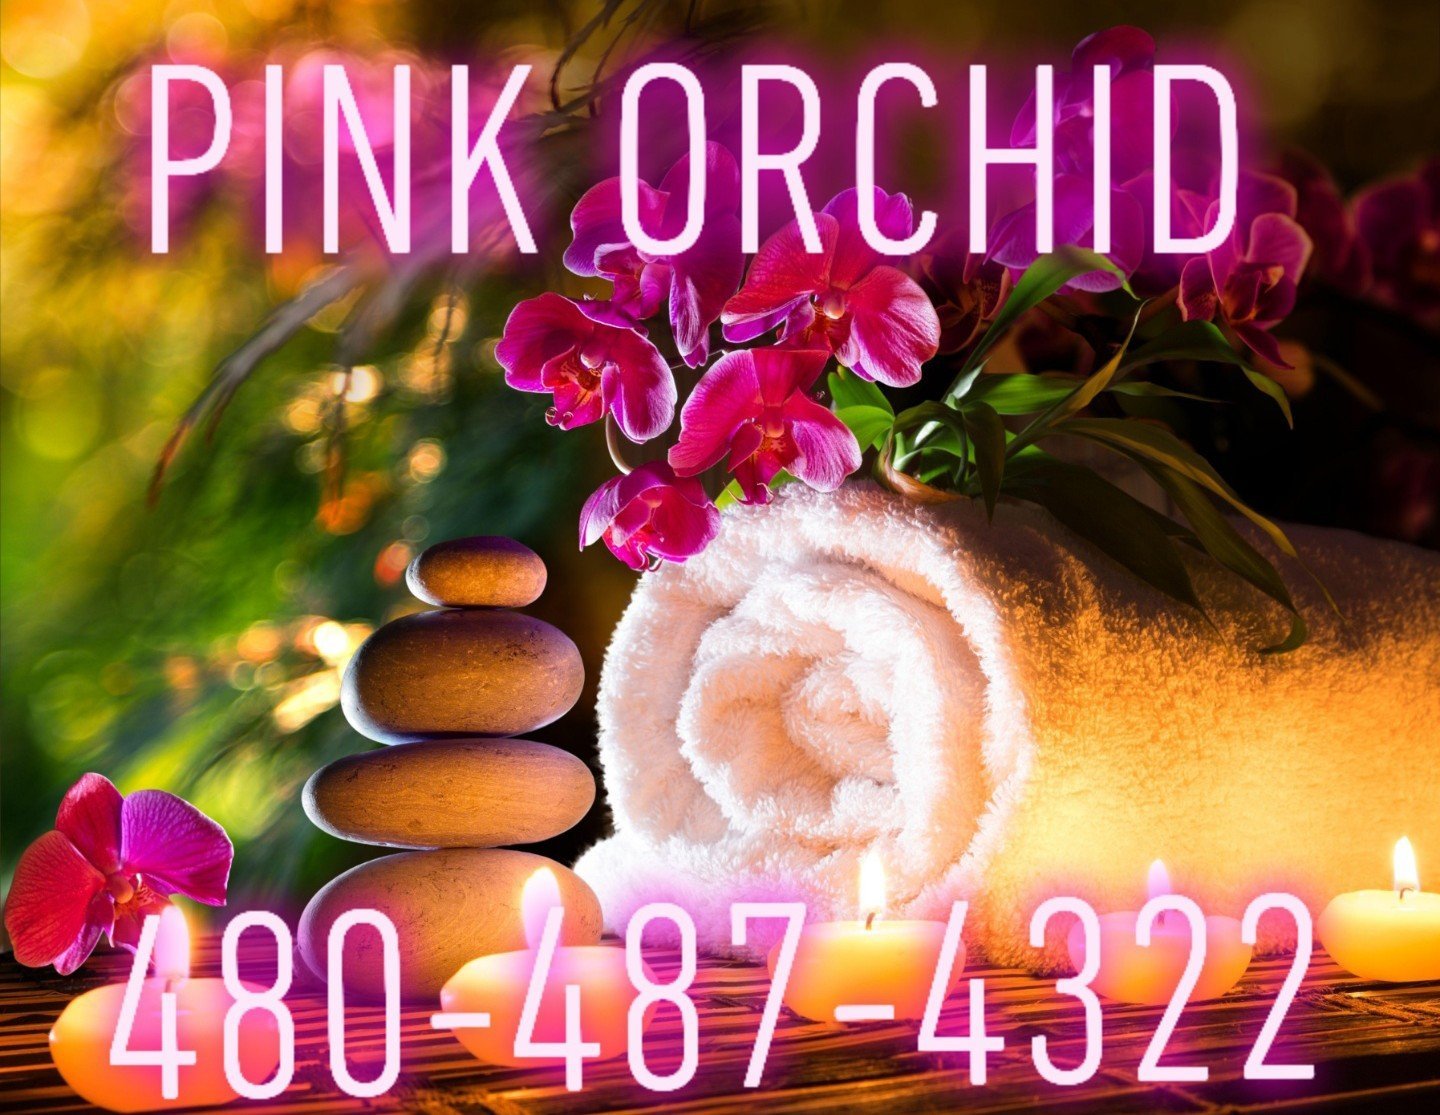 Pink Orchid Profile, Escort in Phoenix, Mesa, Tempe, 480-487-4322